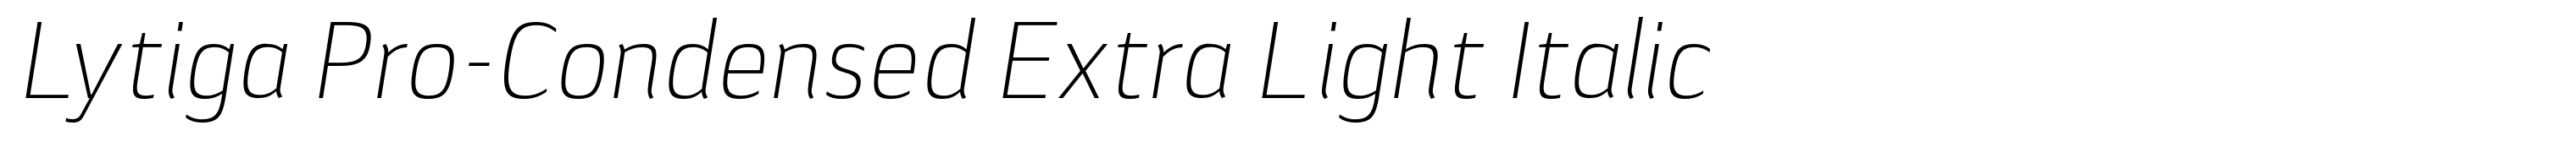 Lytiga Pro-Condensed Extra Light Italic